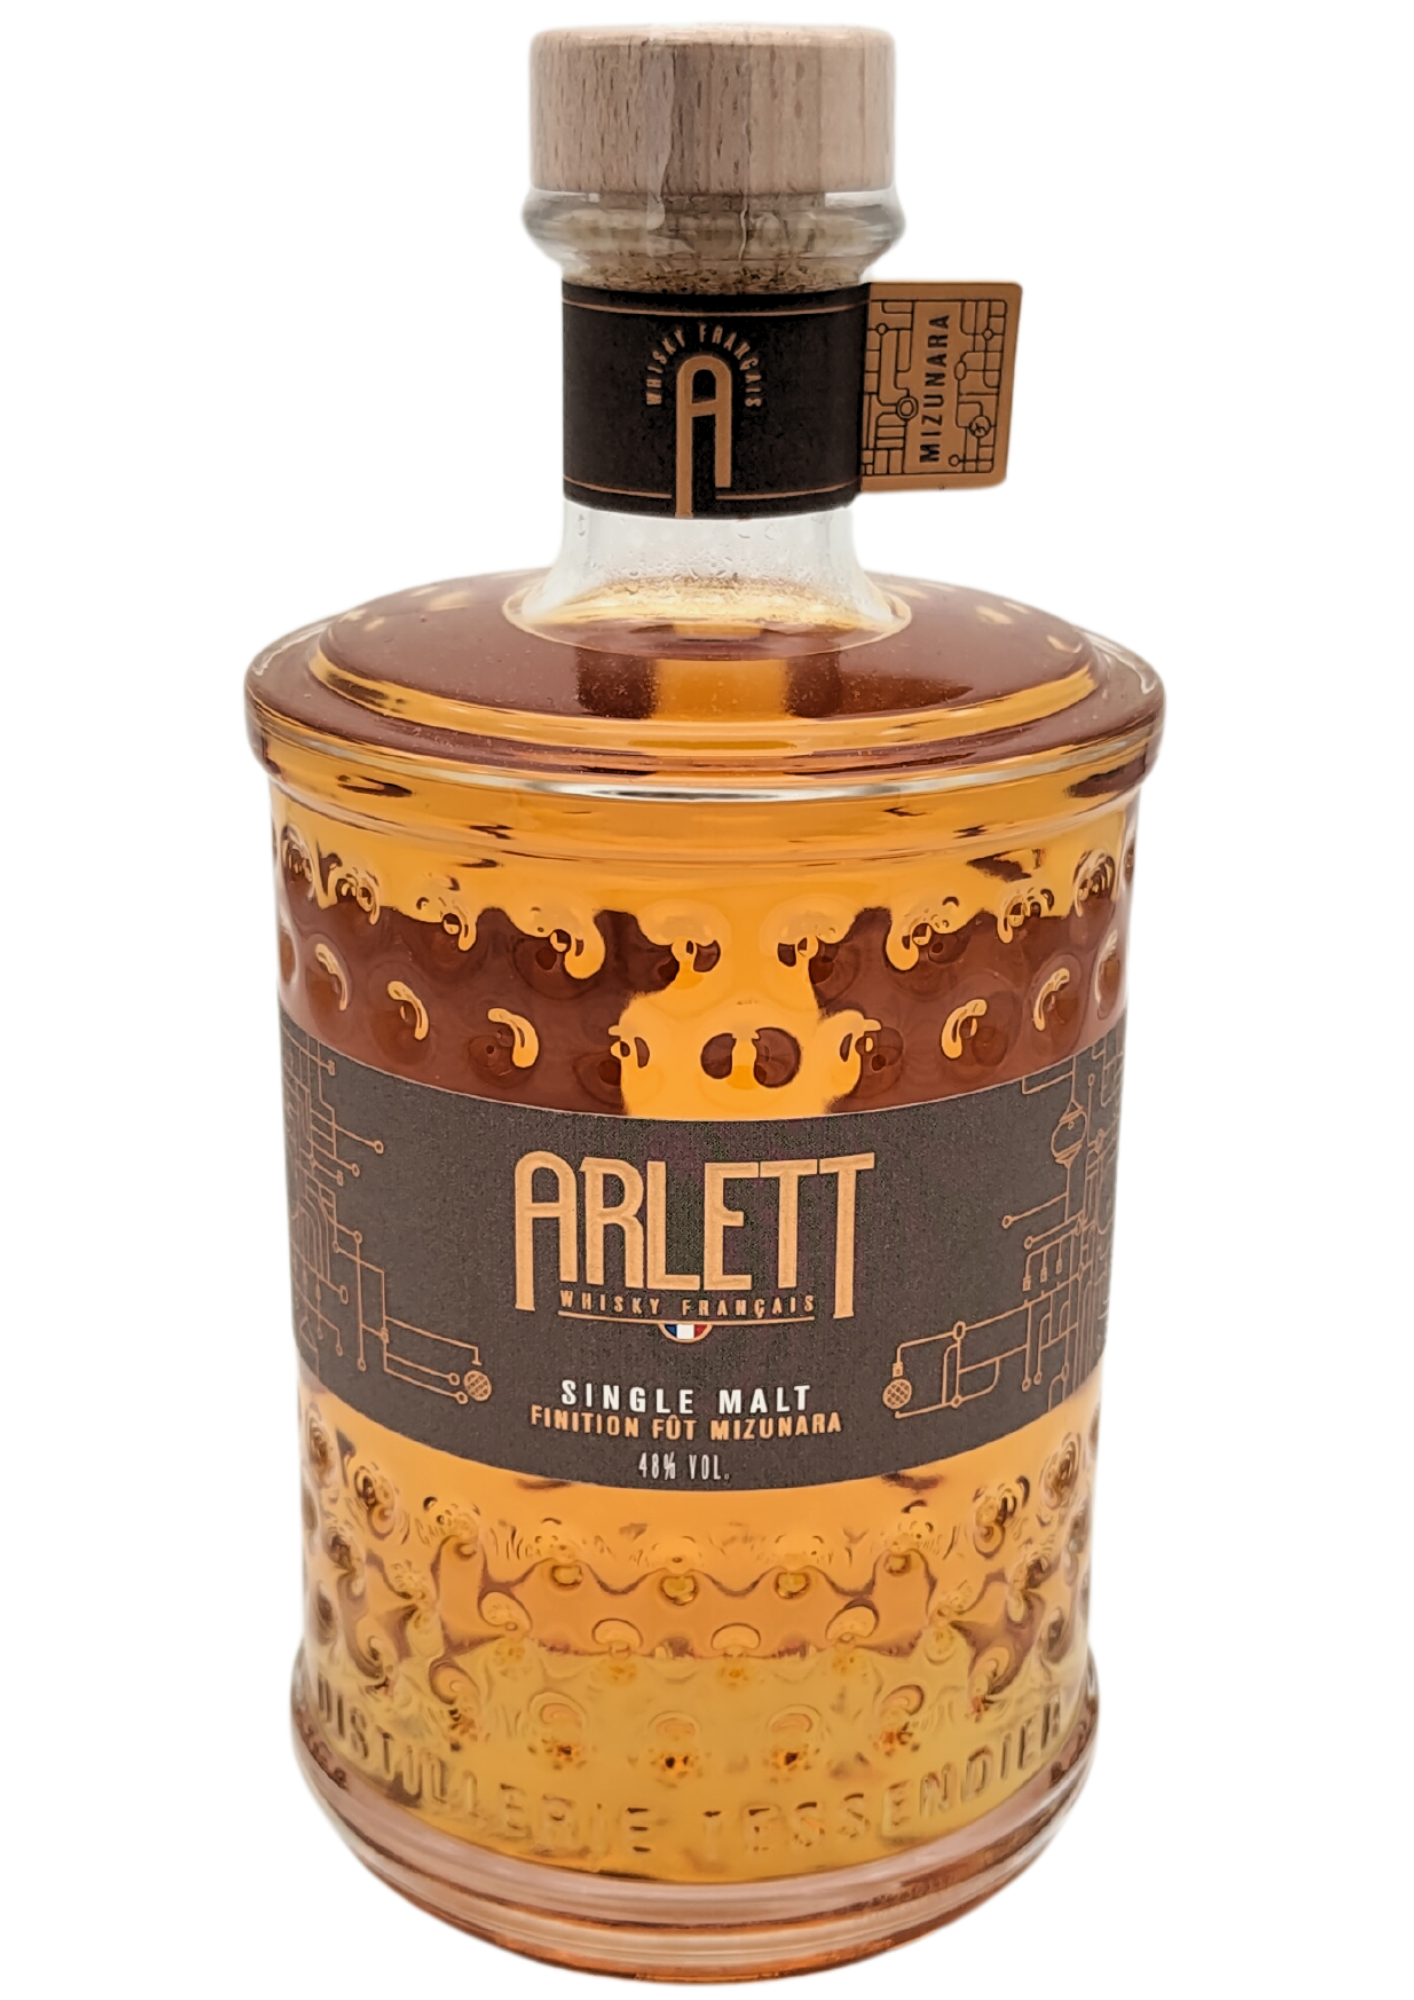 ARLETT - Single Malt Finition Fut Mizunara Whisky